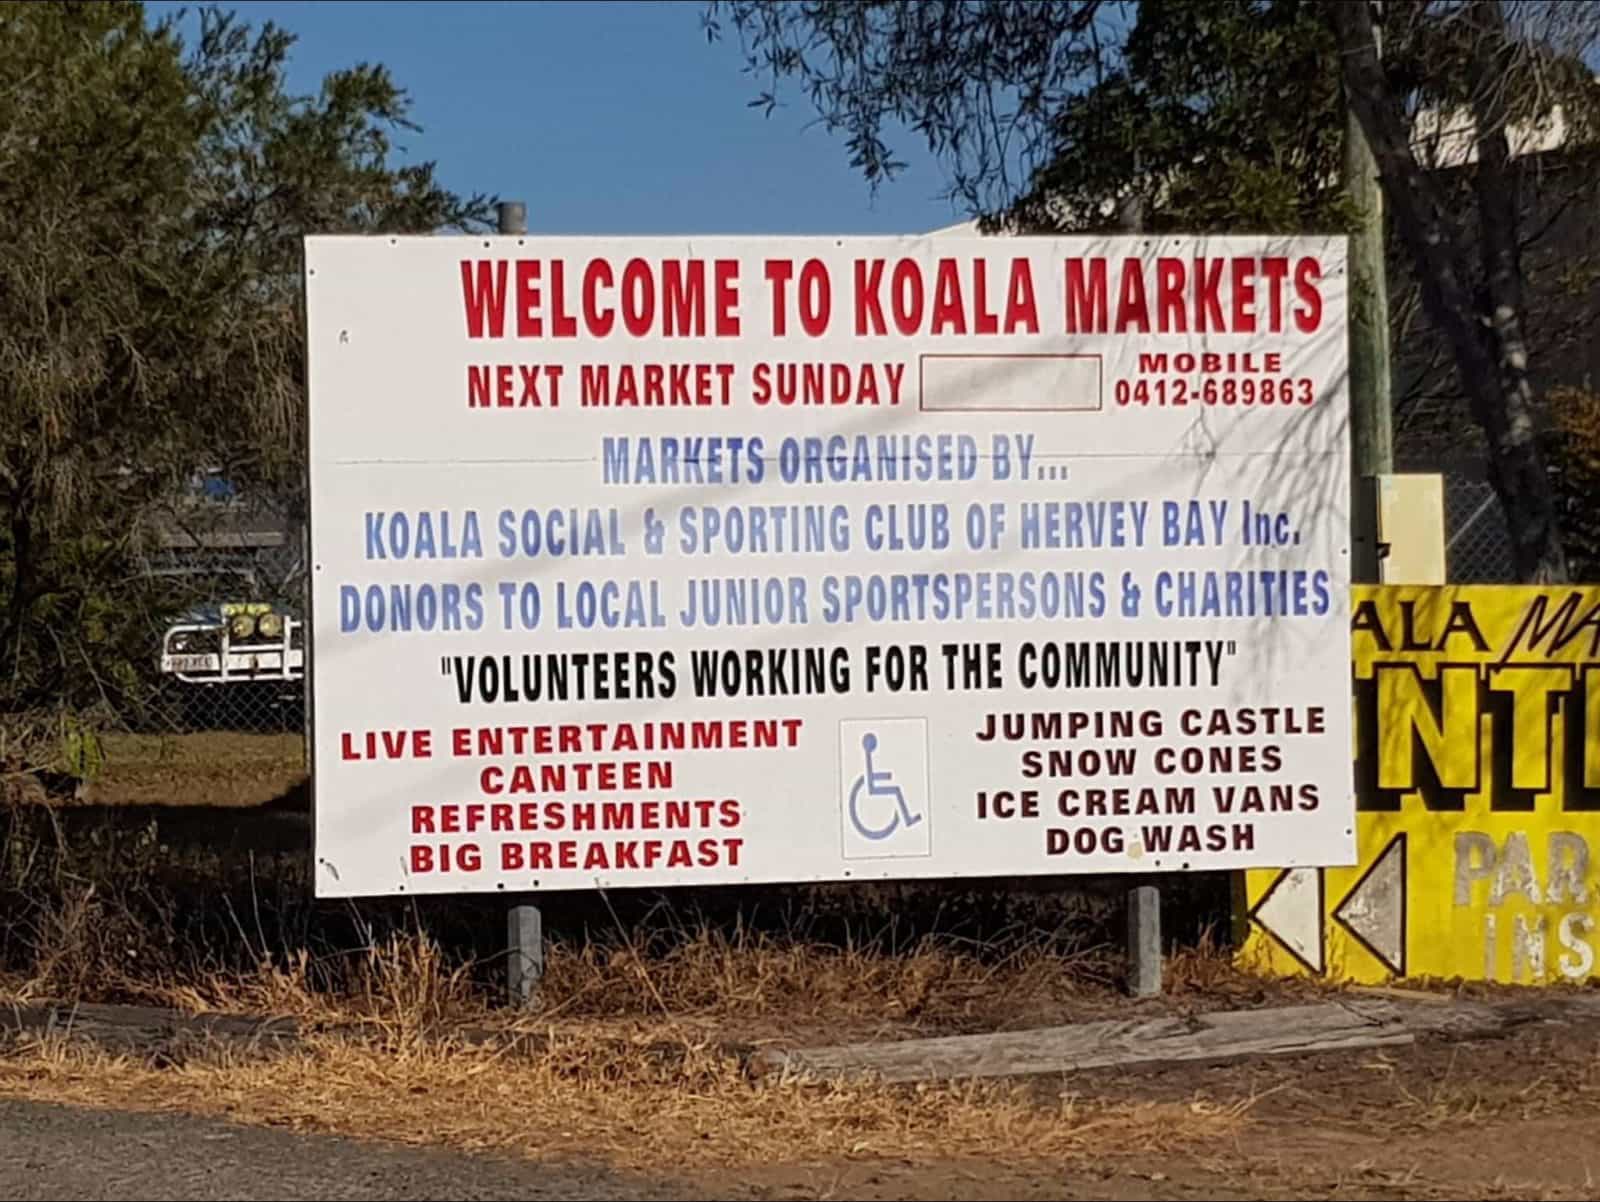 Koala markets